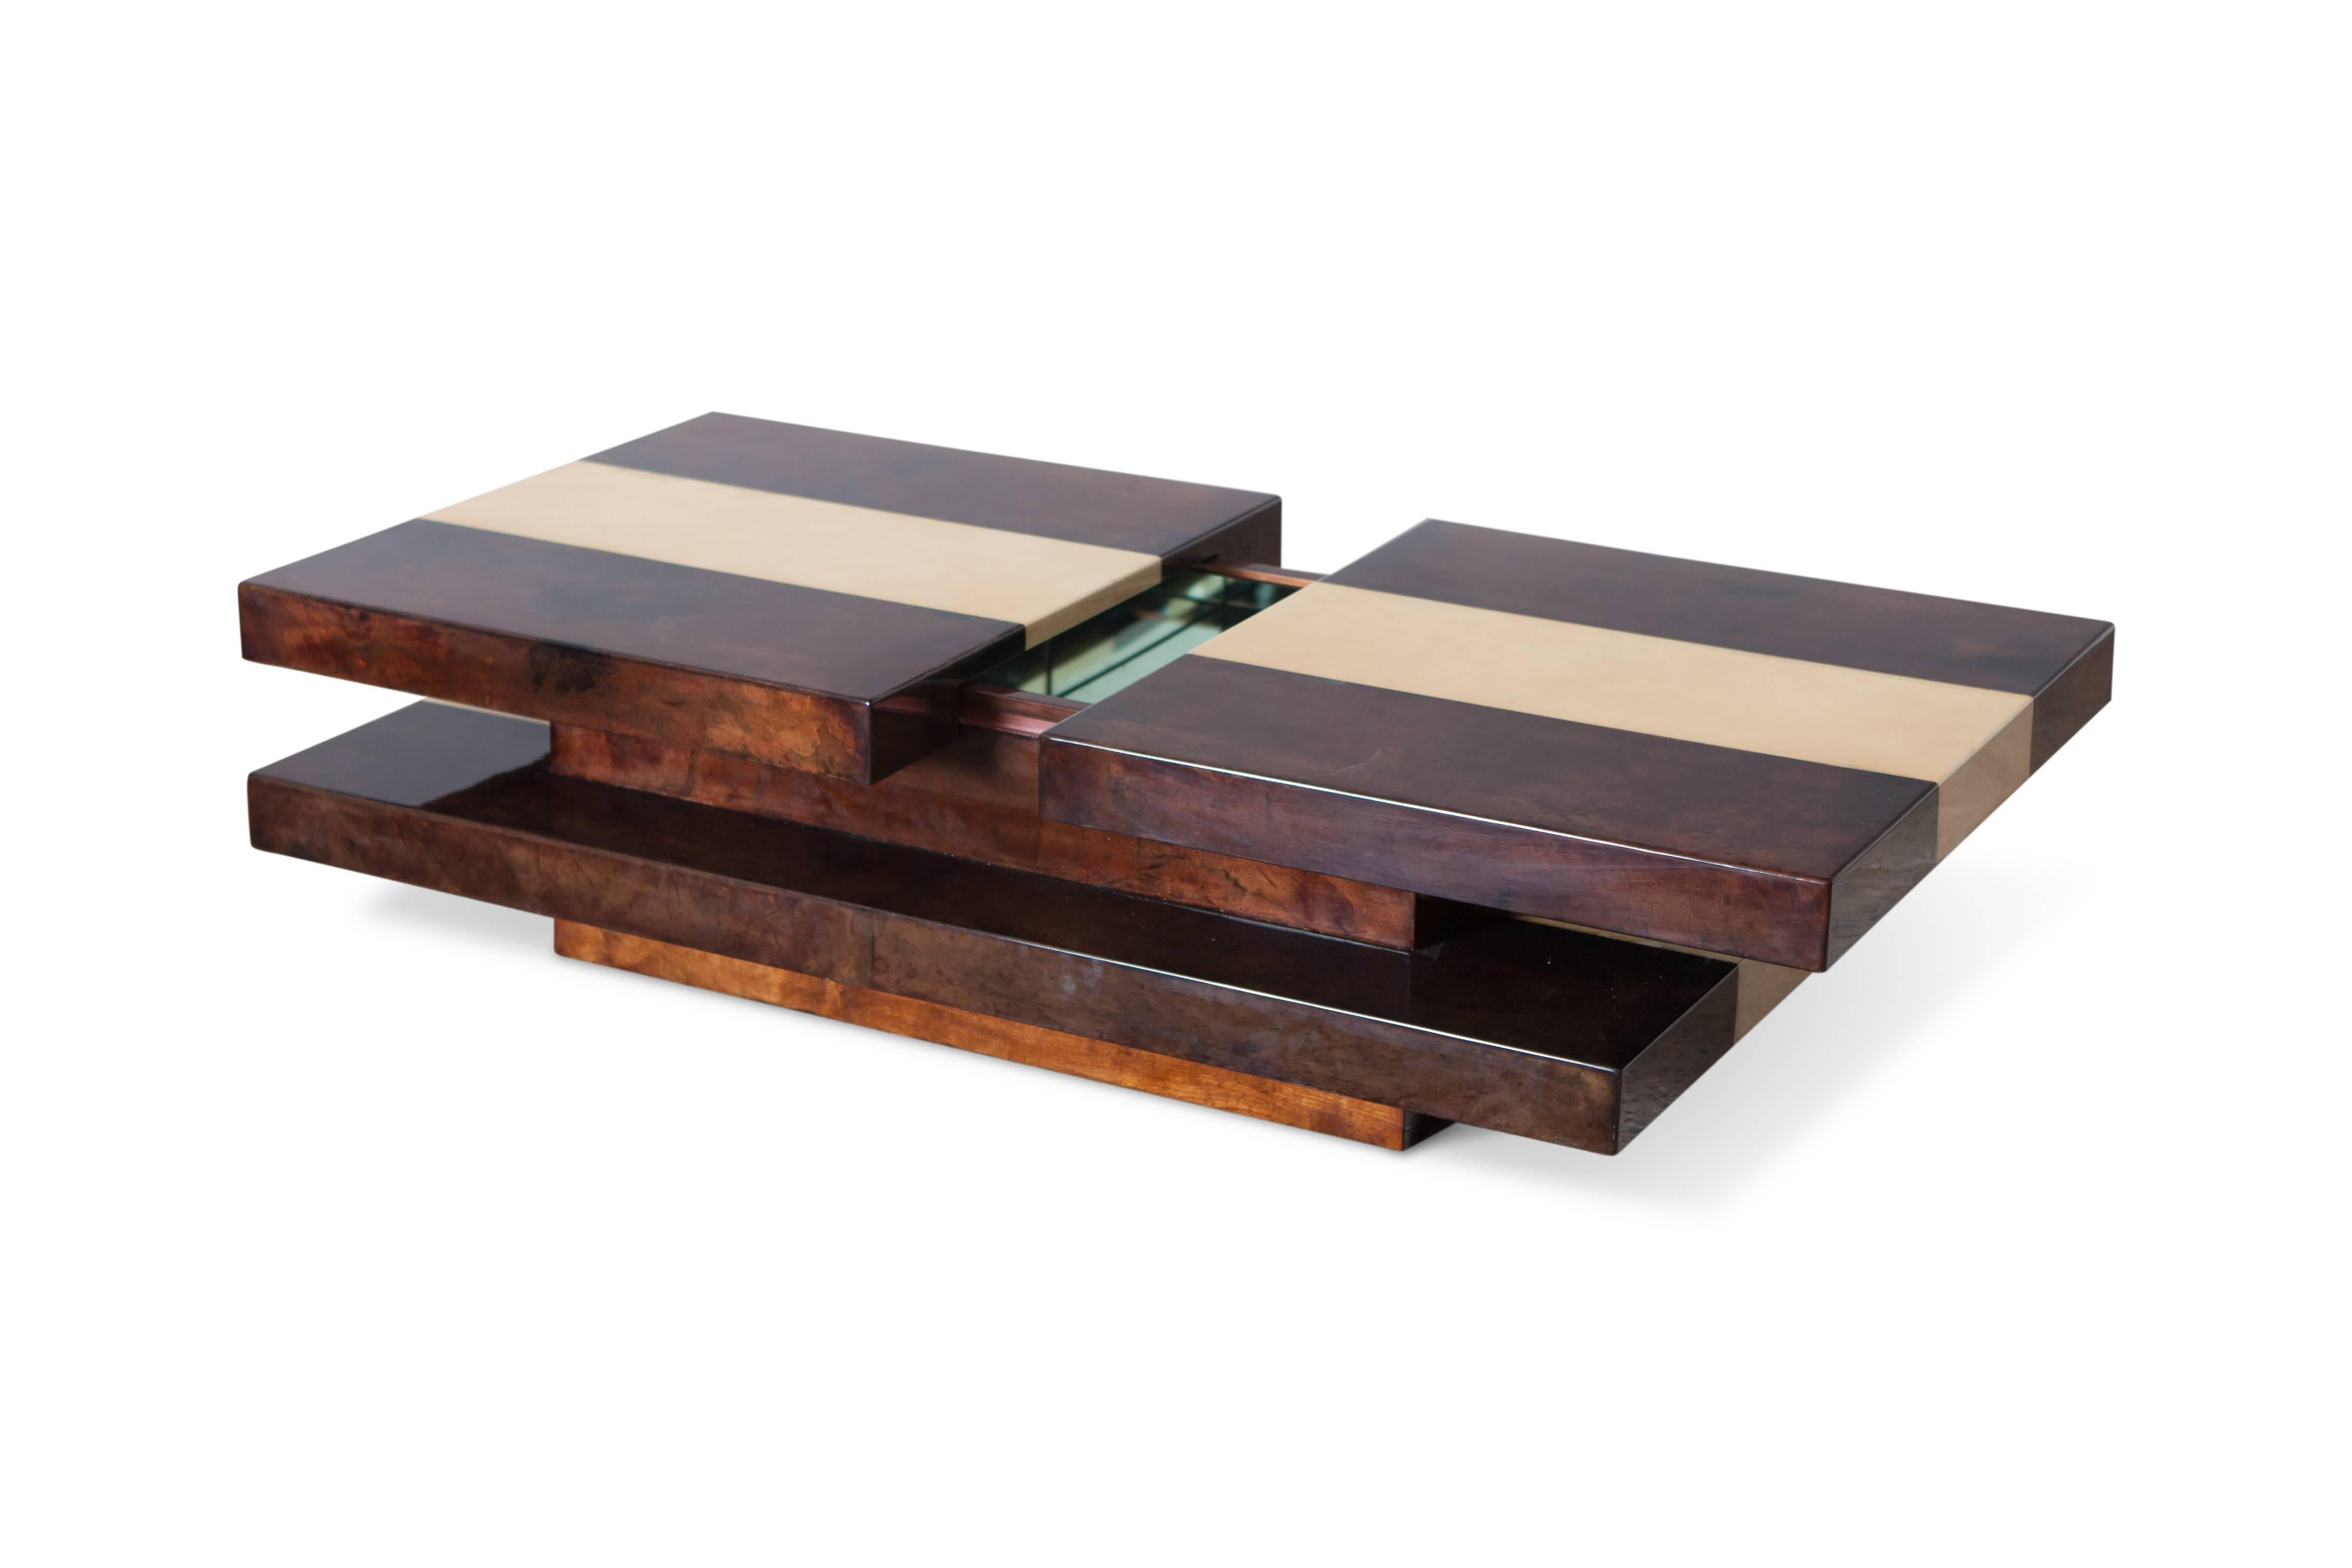 Italian Aldo Tura two tier sliding coffee table with hidden bar